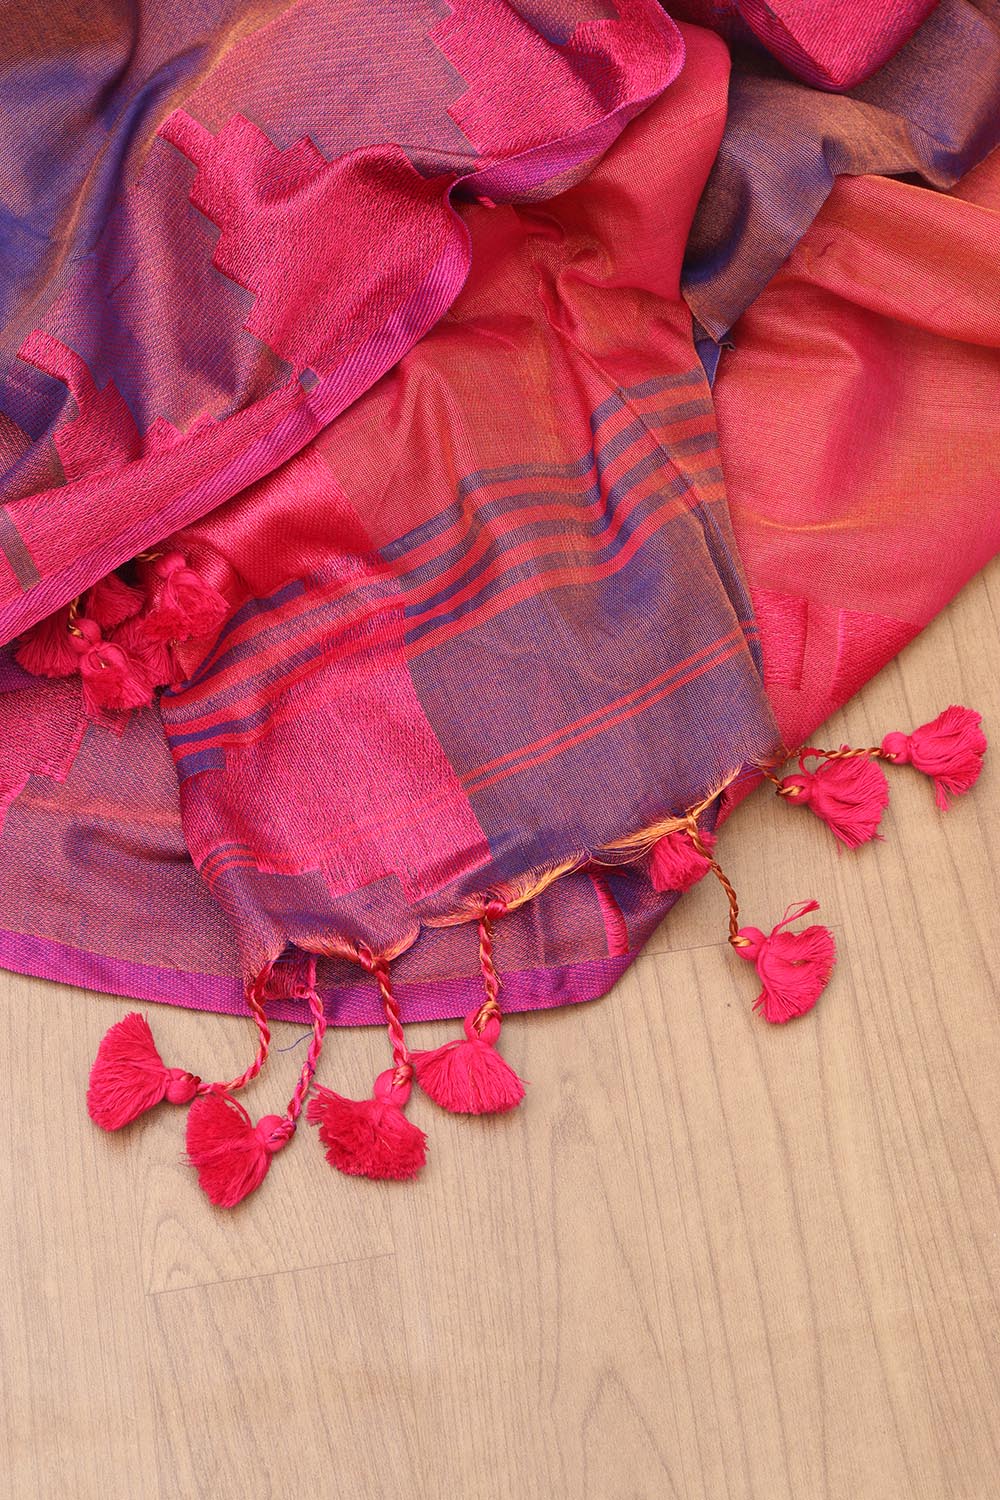 Elegant Purple Bengal Cotton Saree with Temple Border - Luxurion World